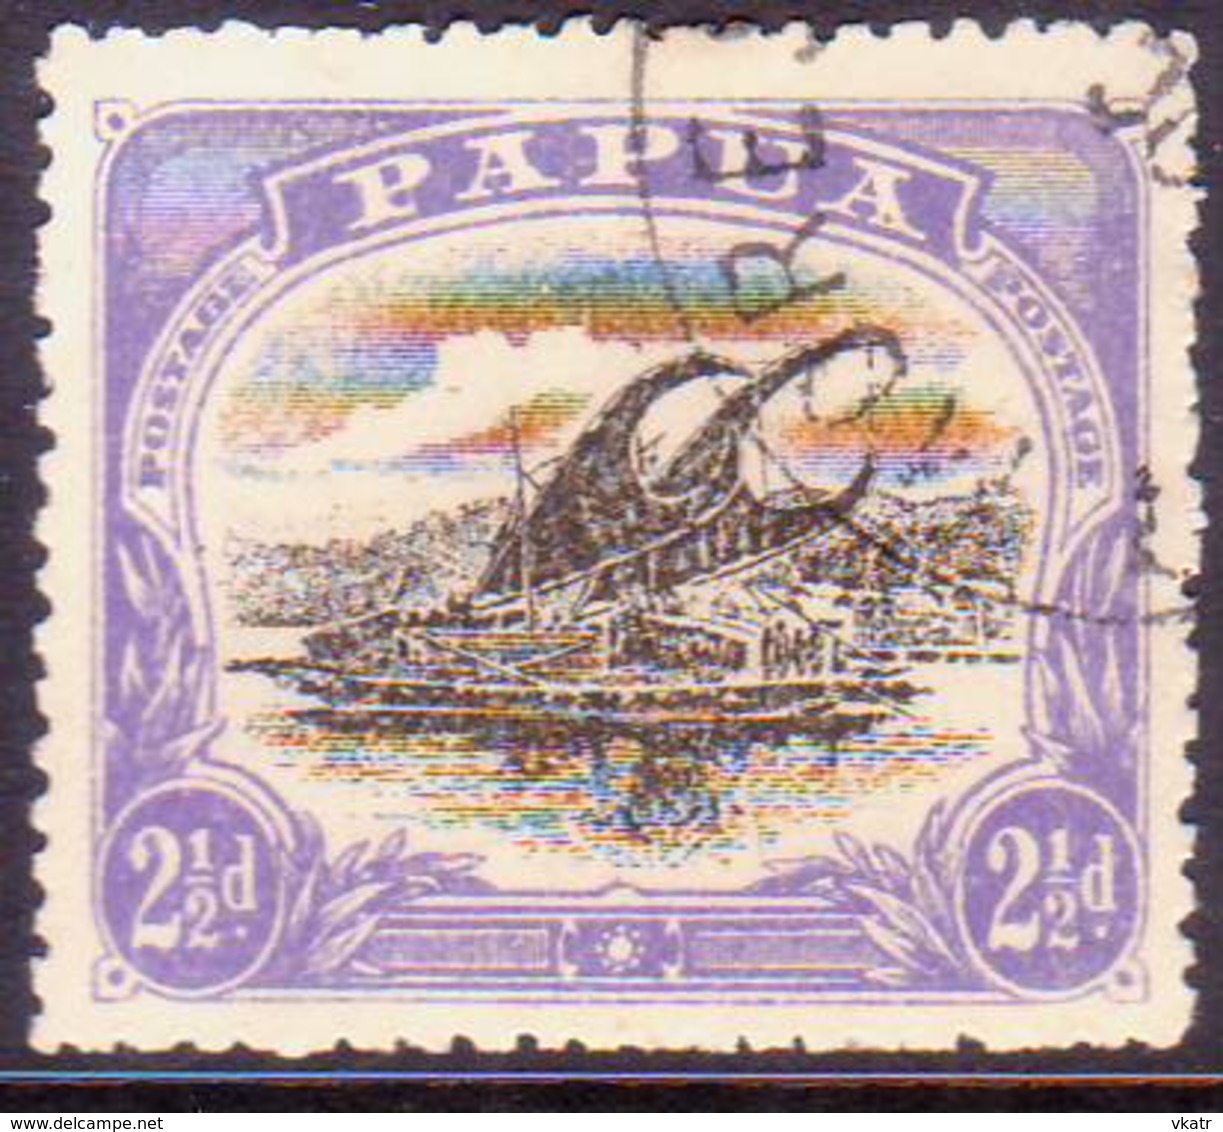 PAPUA (BRITISH NEW GUINEA) 1910 SG #78 2½d Used Large "PAPUA" Wmk Upright Perf.12½ CV £18 - Papouasie-Nouvelle-Guinée